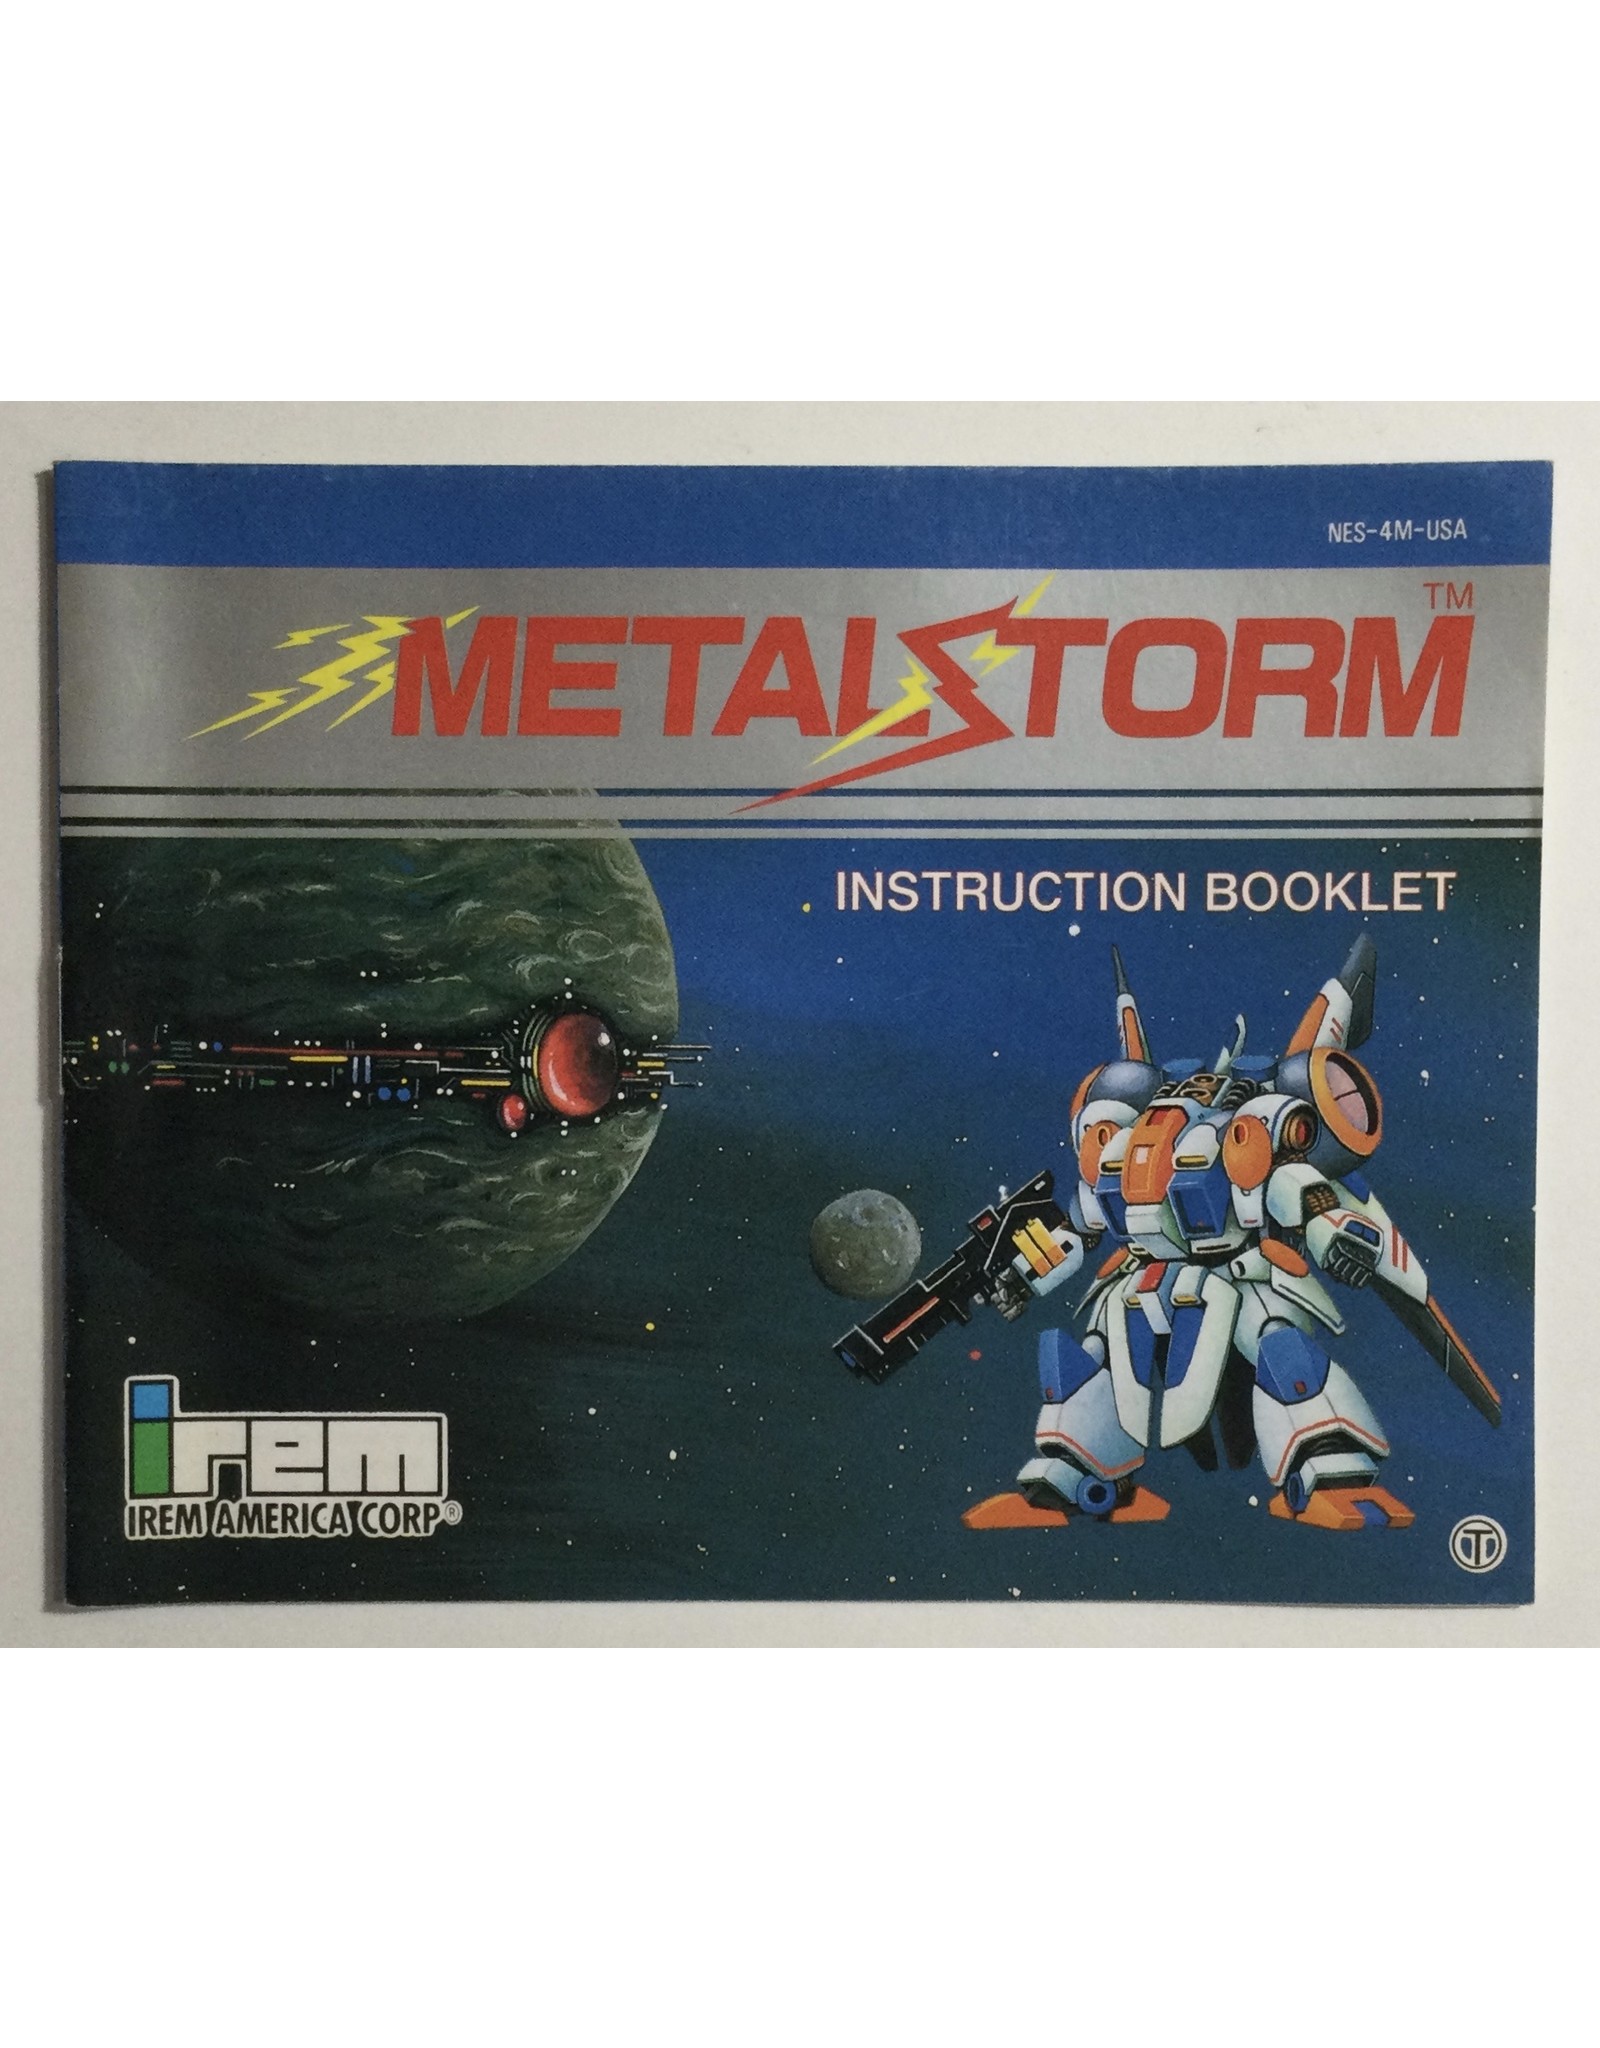 irem Metalstorm for Nintendo Entertainment system (NES)